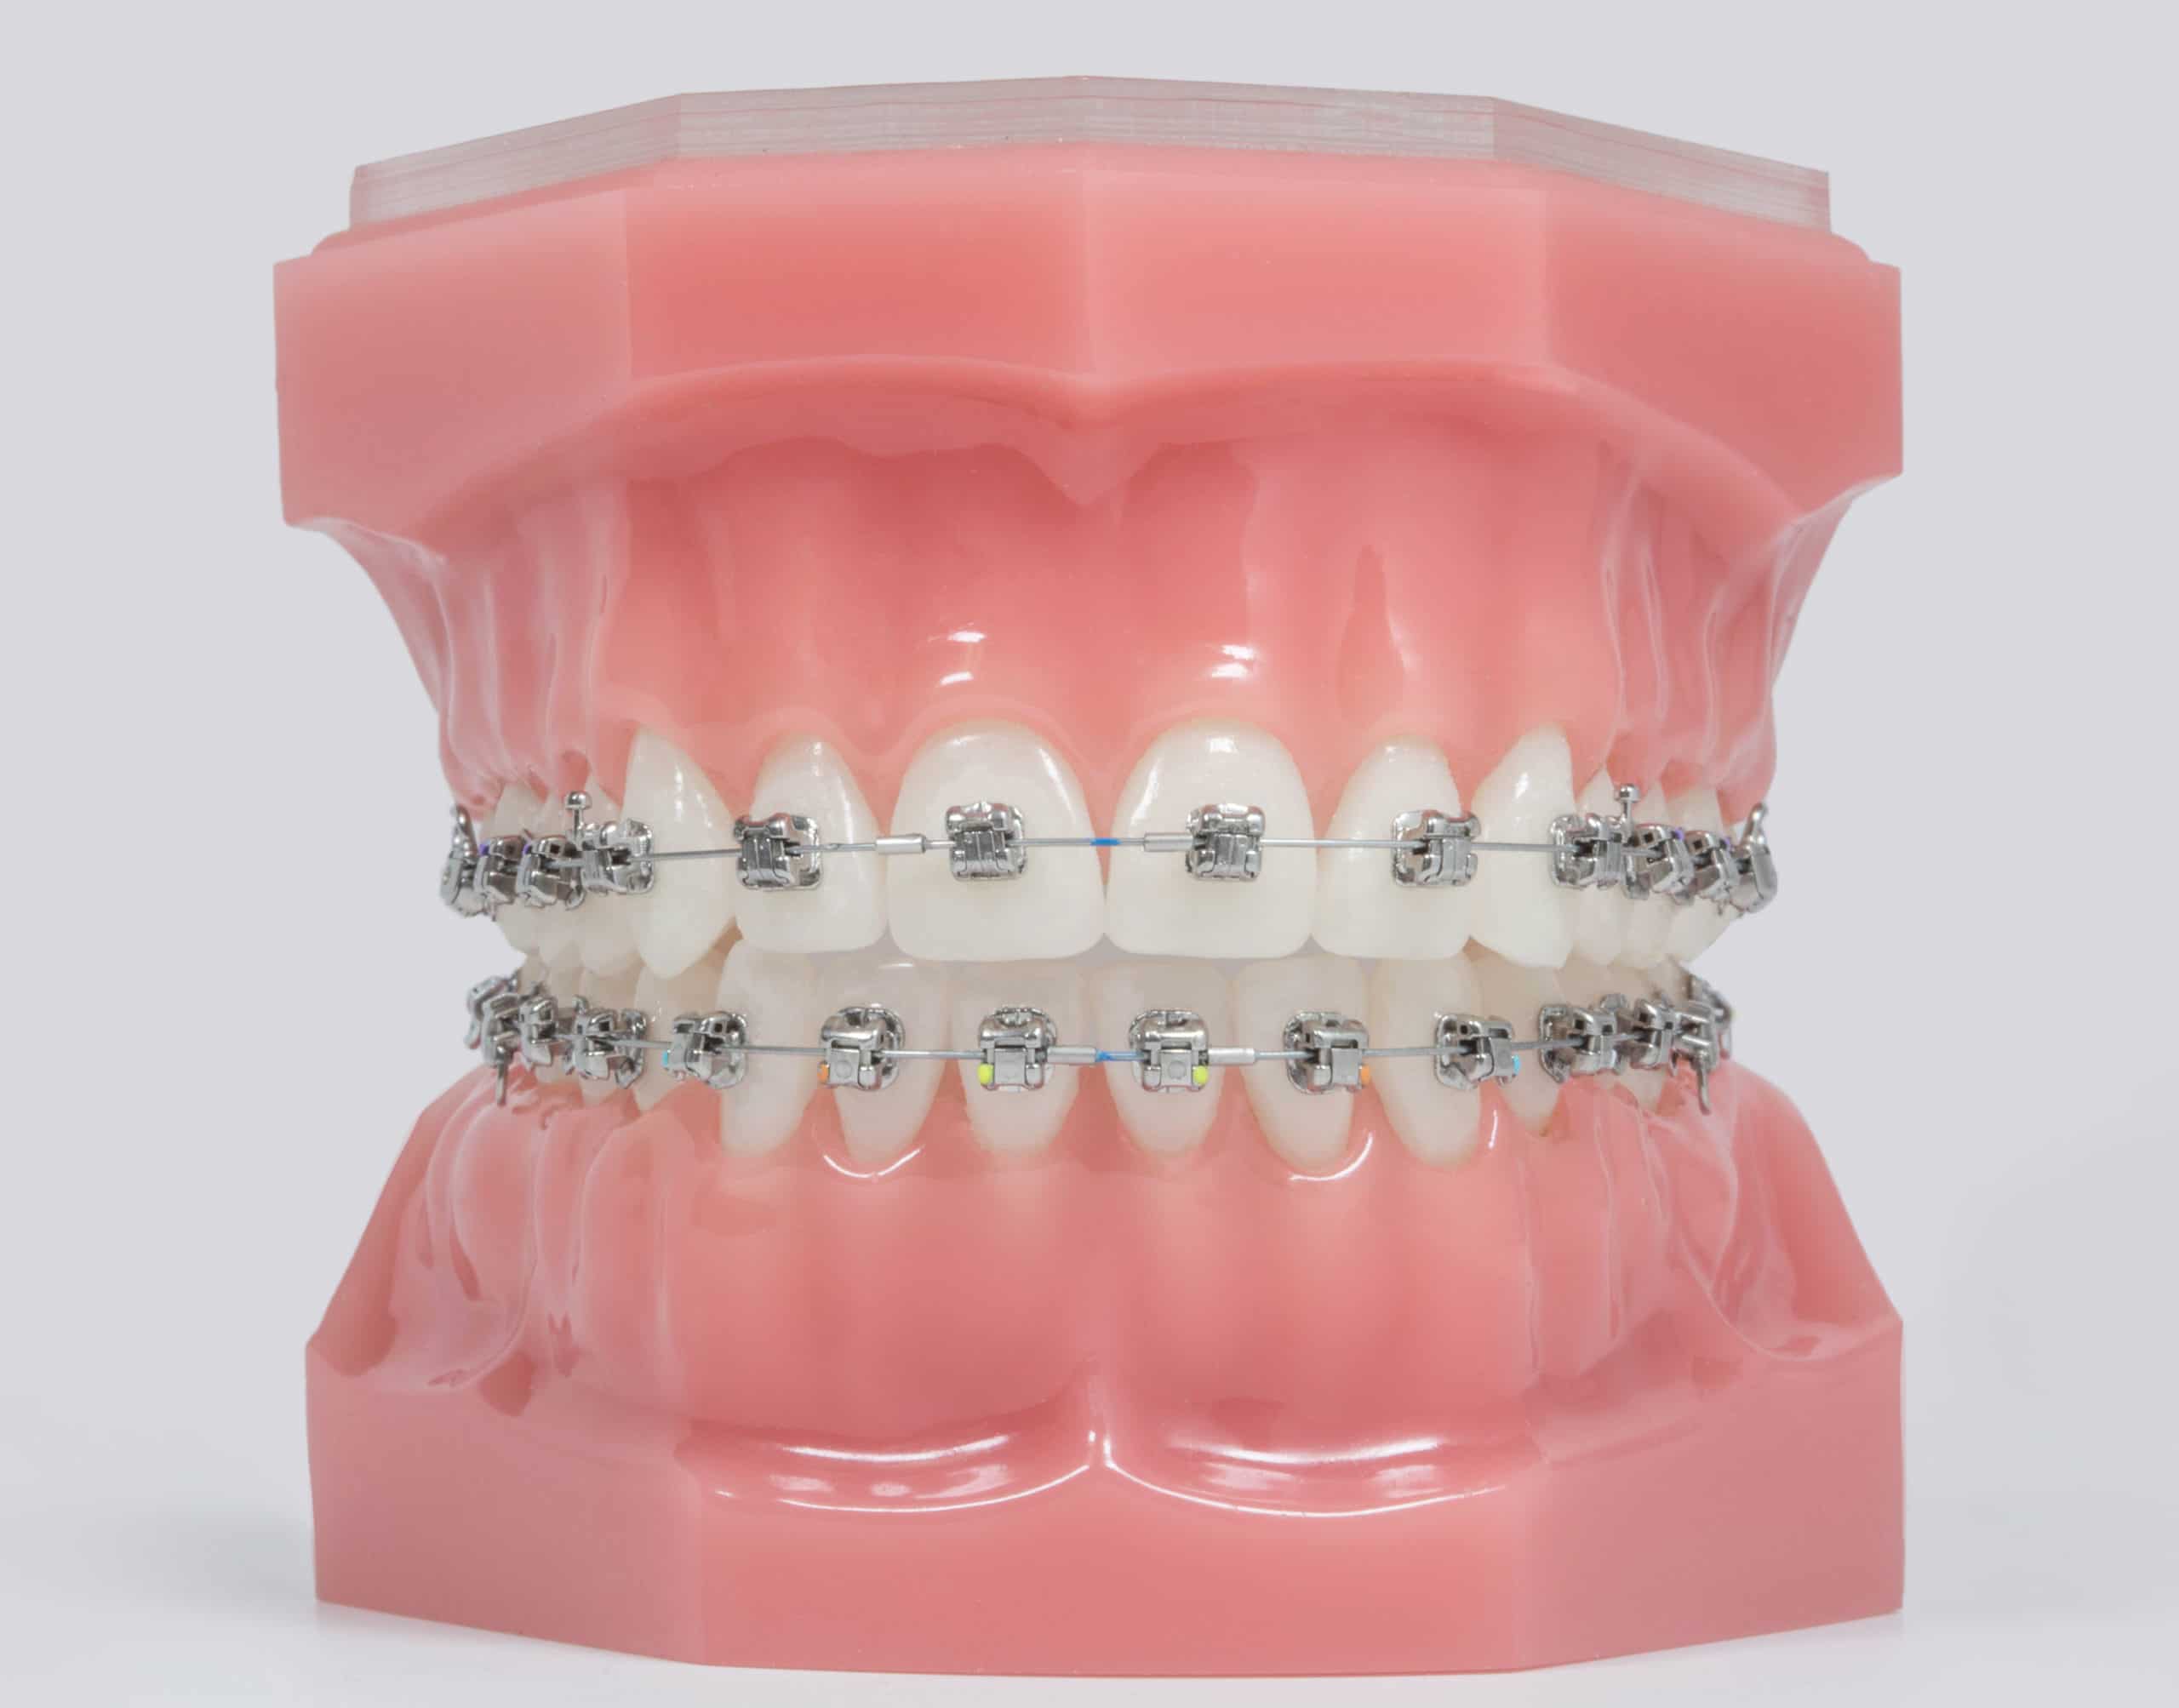 Model of teeth with Damon Metal Braces.